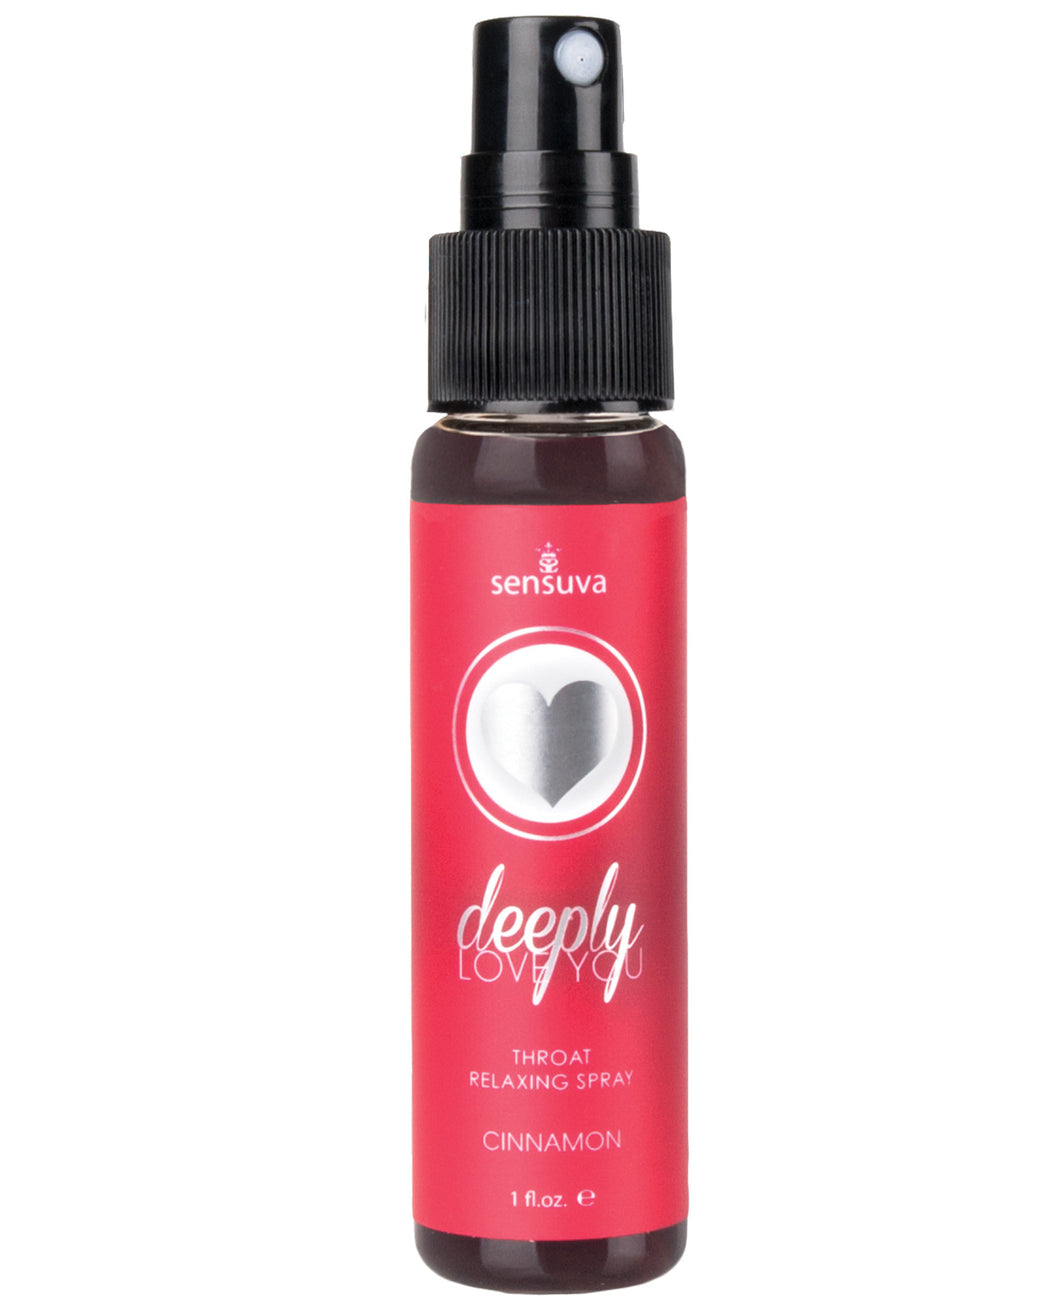 Deeply Love You Throat Relaxing Spray - 1 Oz Bottle Cinnamon